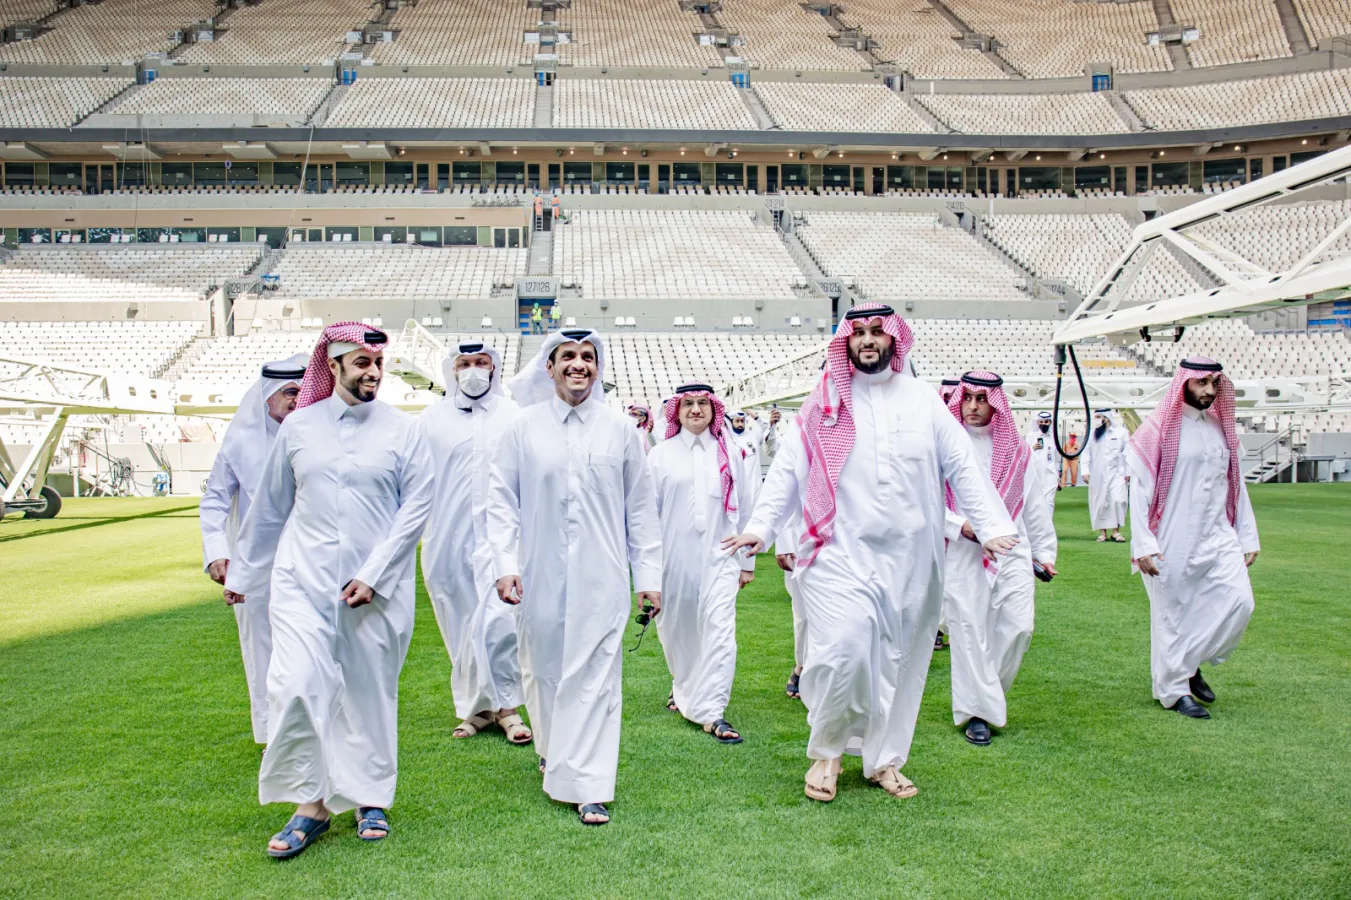 Minister of State and Cabinet Member of the Kingdom of Saudi Arabia visit Qatari Diar